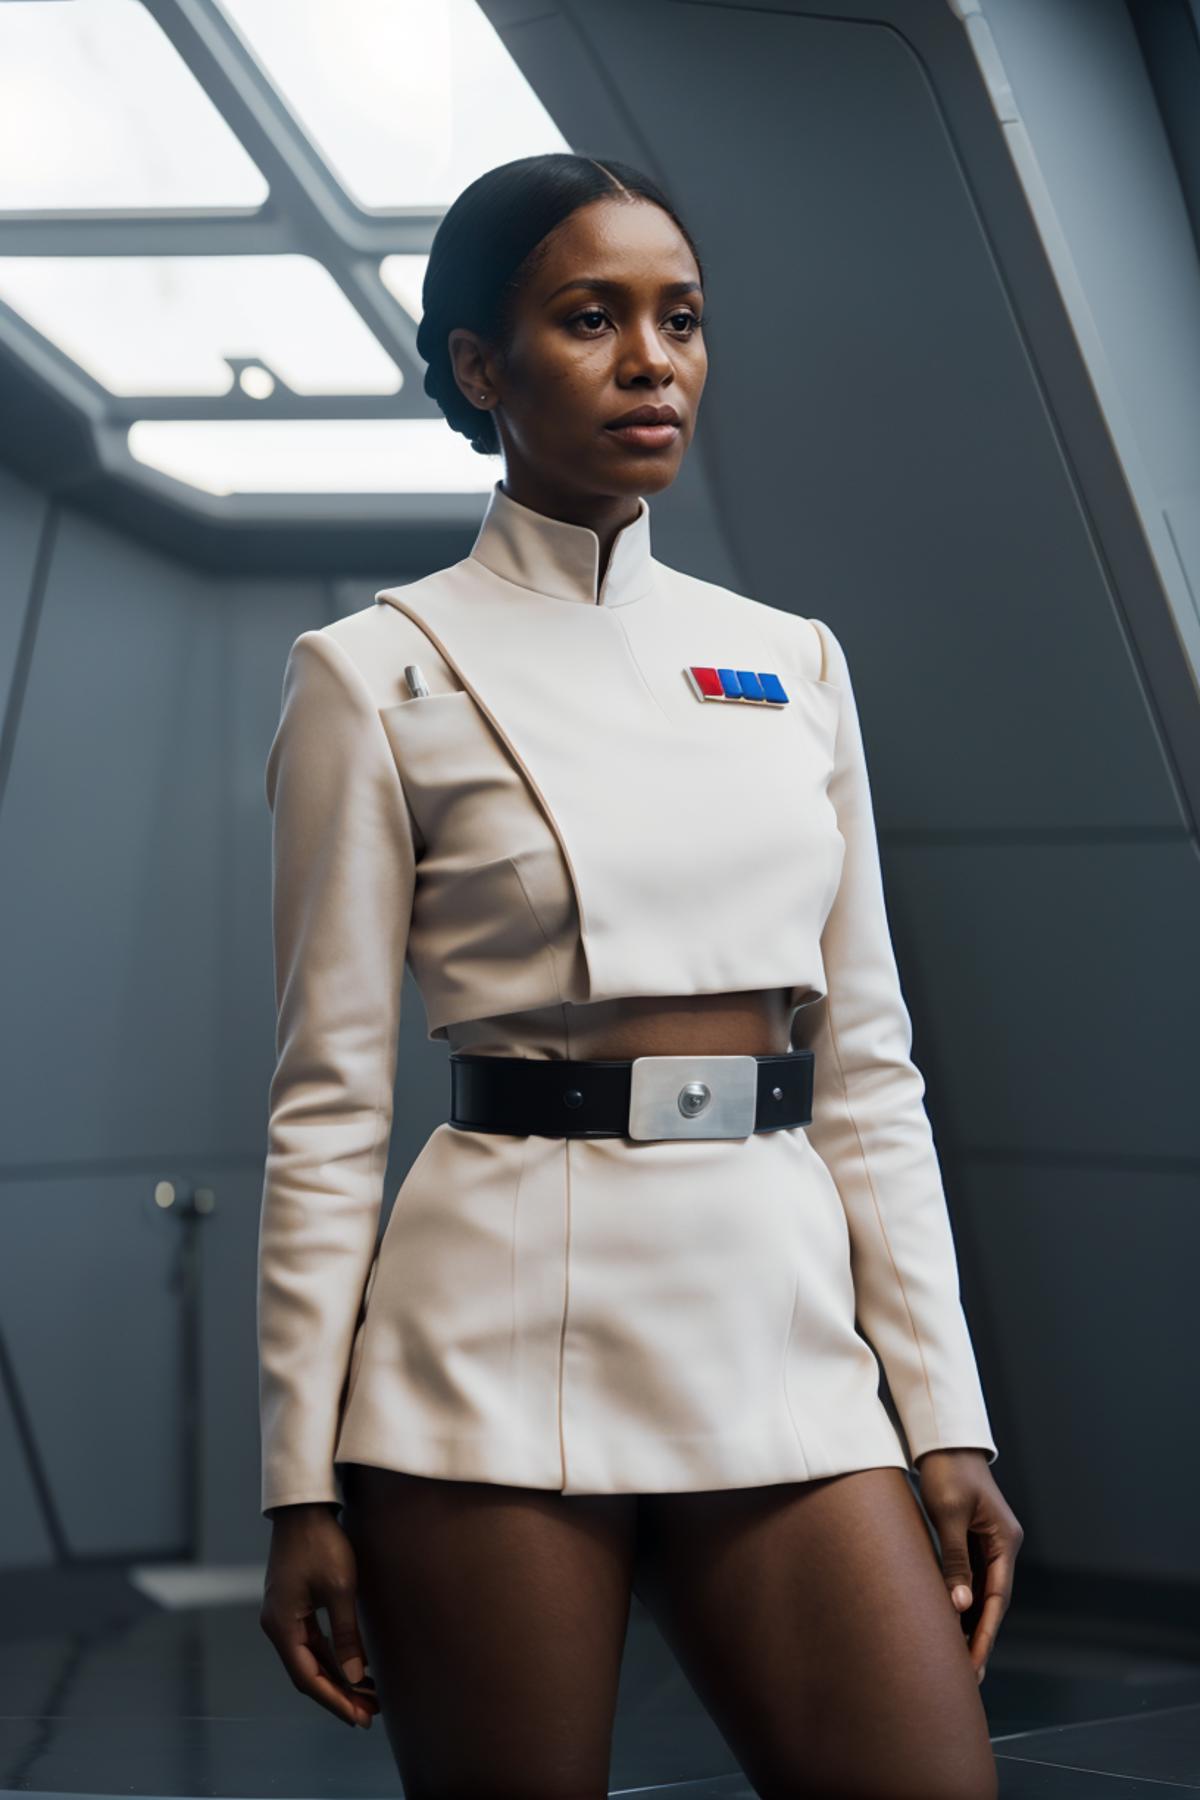 Star Wars imperial officer uniform image by metulski